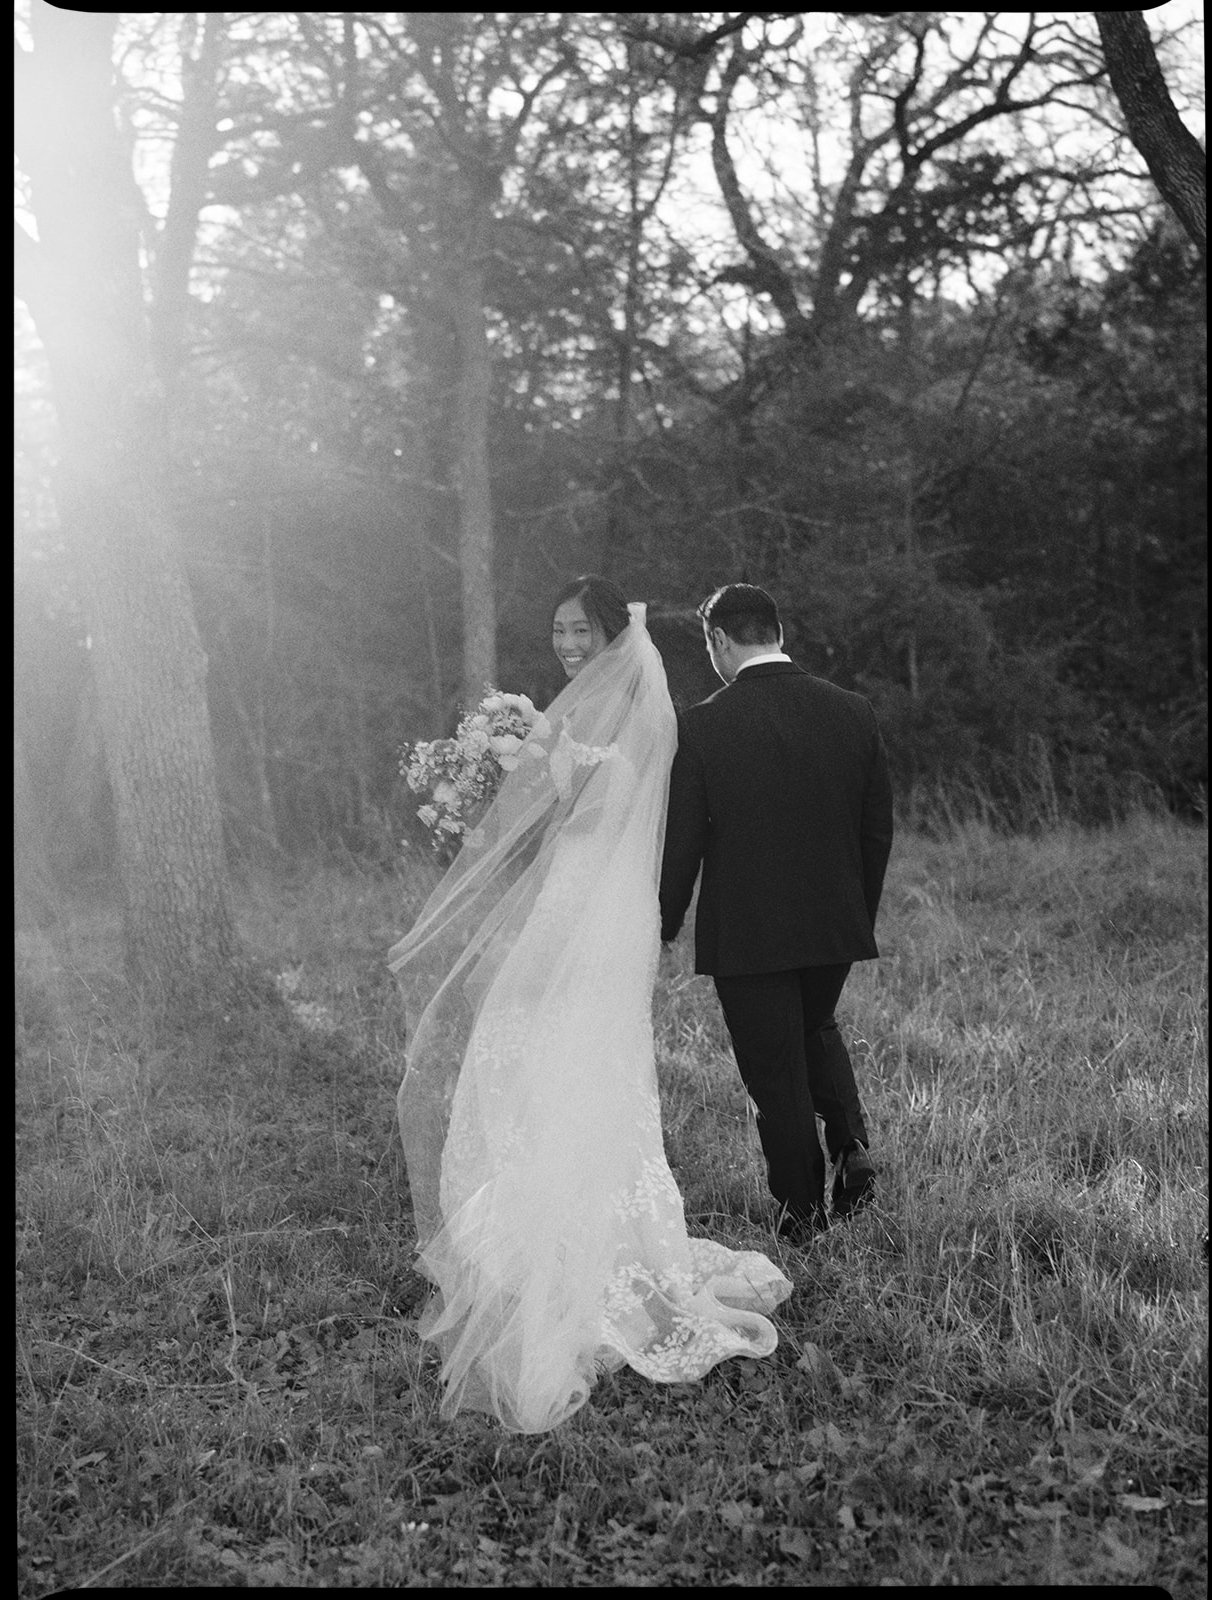 Best-Austin-Wedding-Photographers-Elopement-Film-35mm-Asheville-Santa-Barbara-Grand-Lady-156.jpg